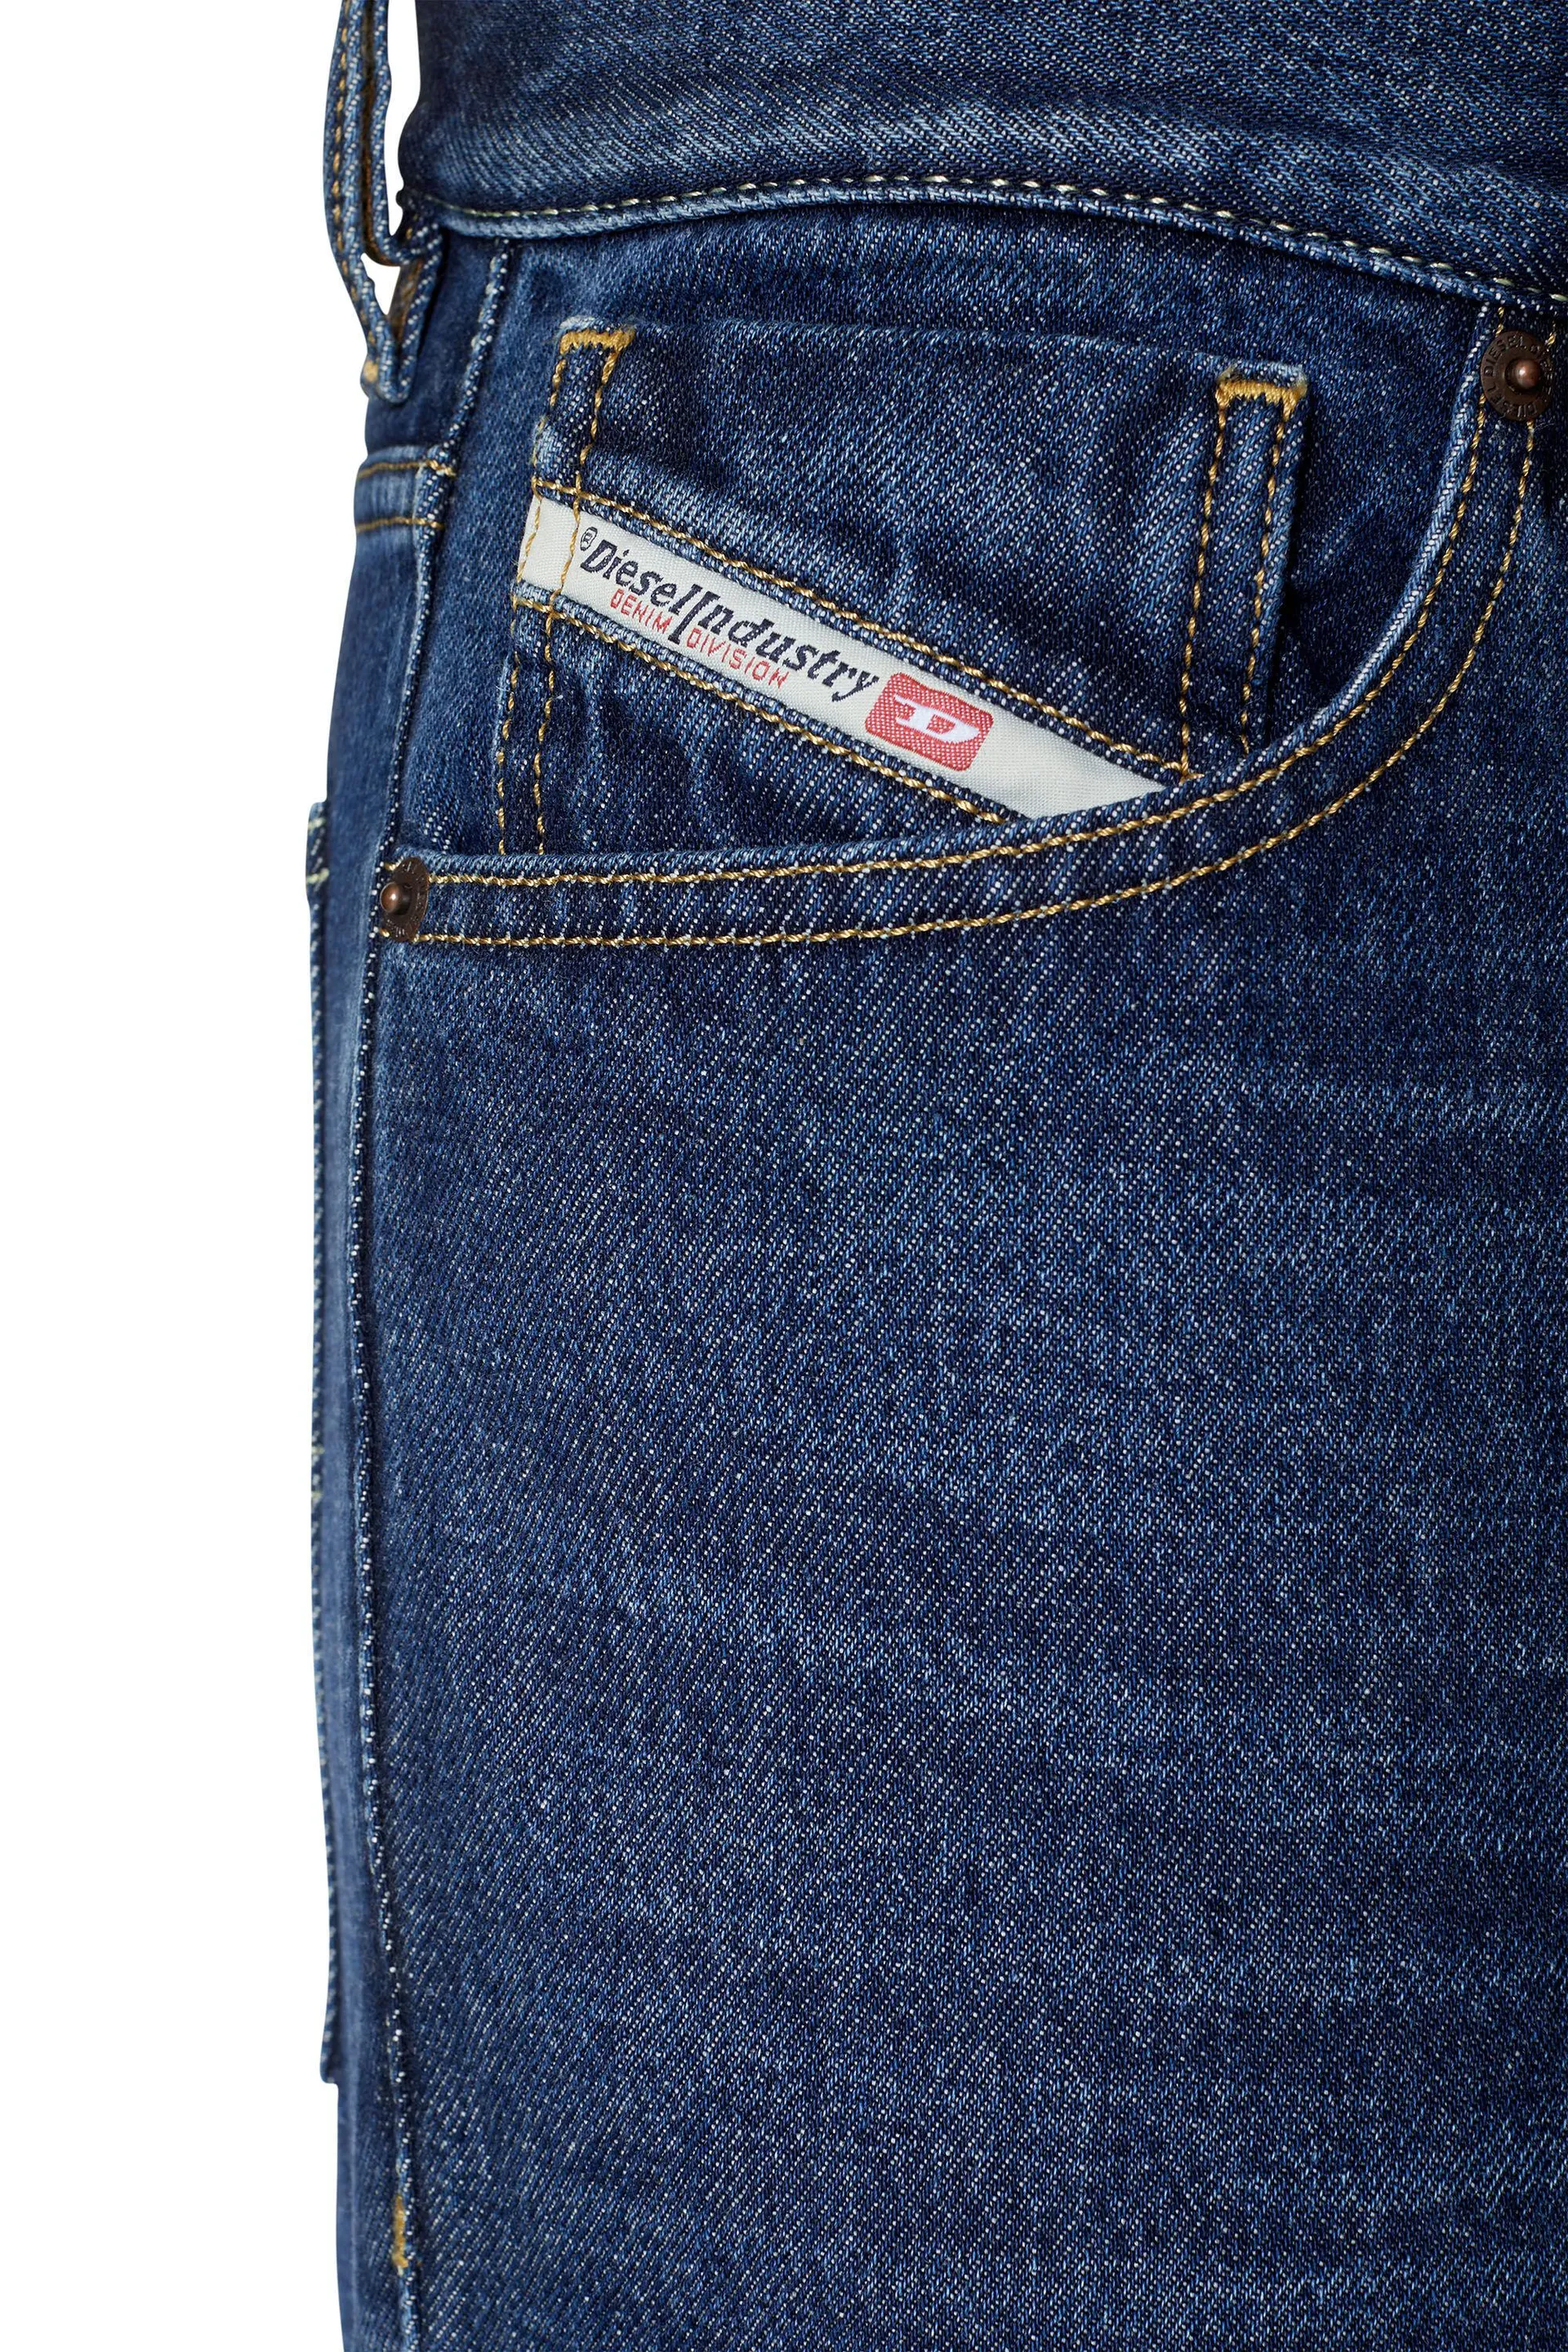 1995 d-sark 09c03 straight jeans